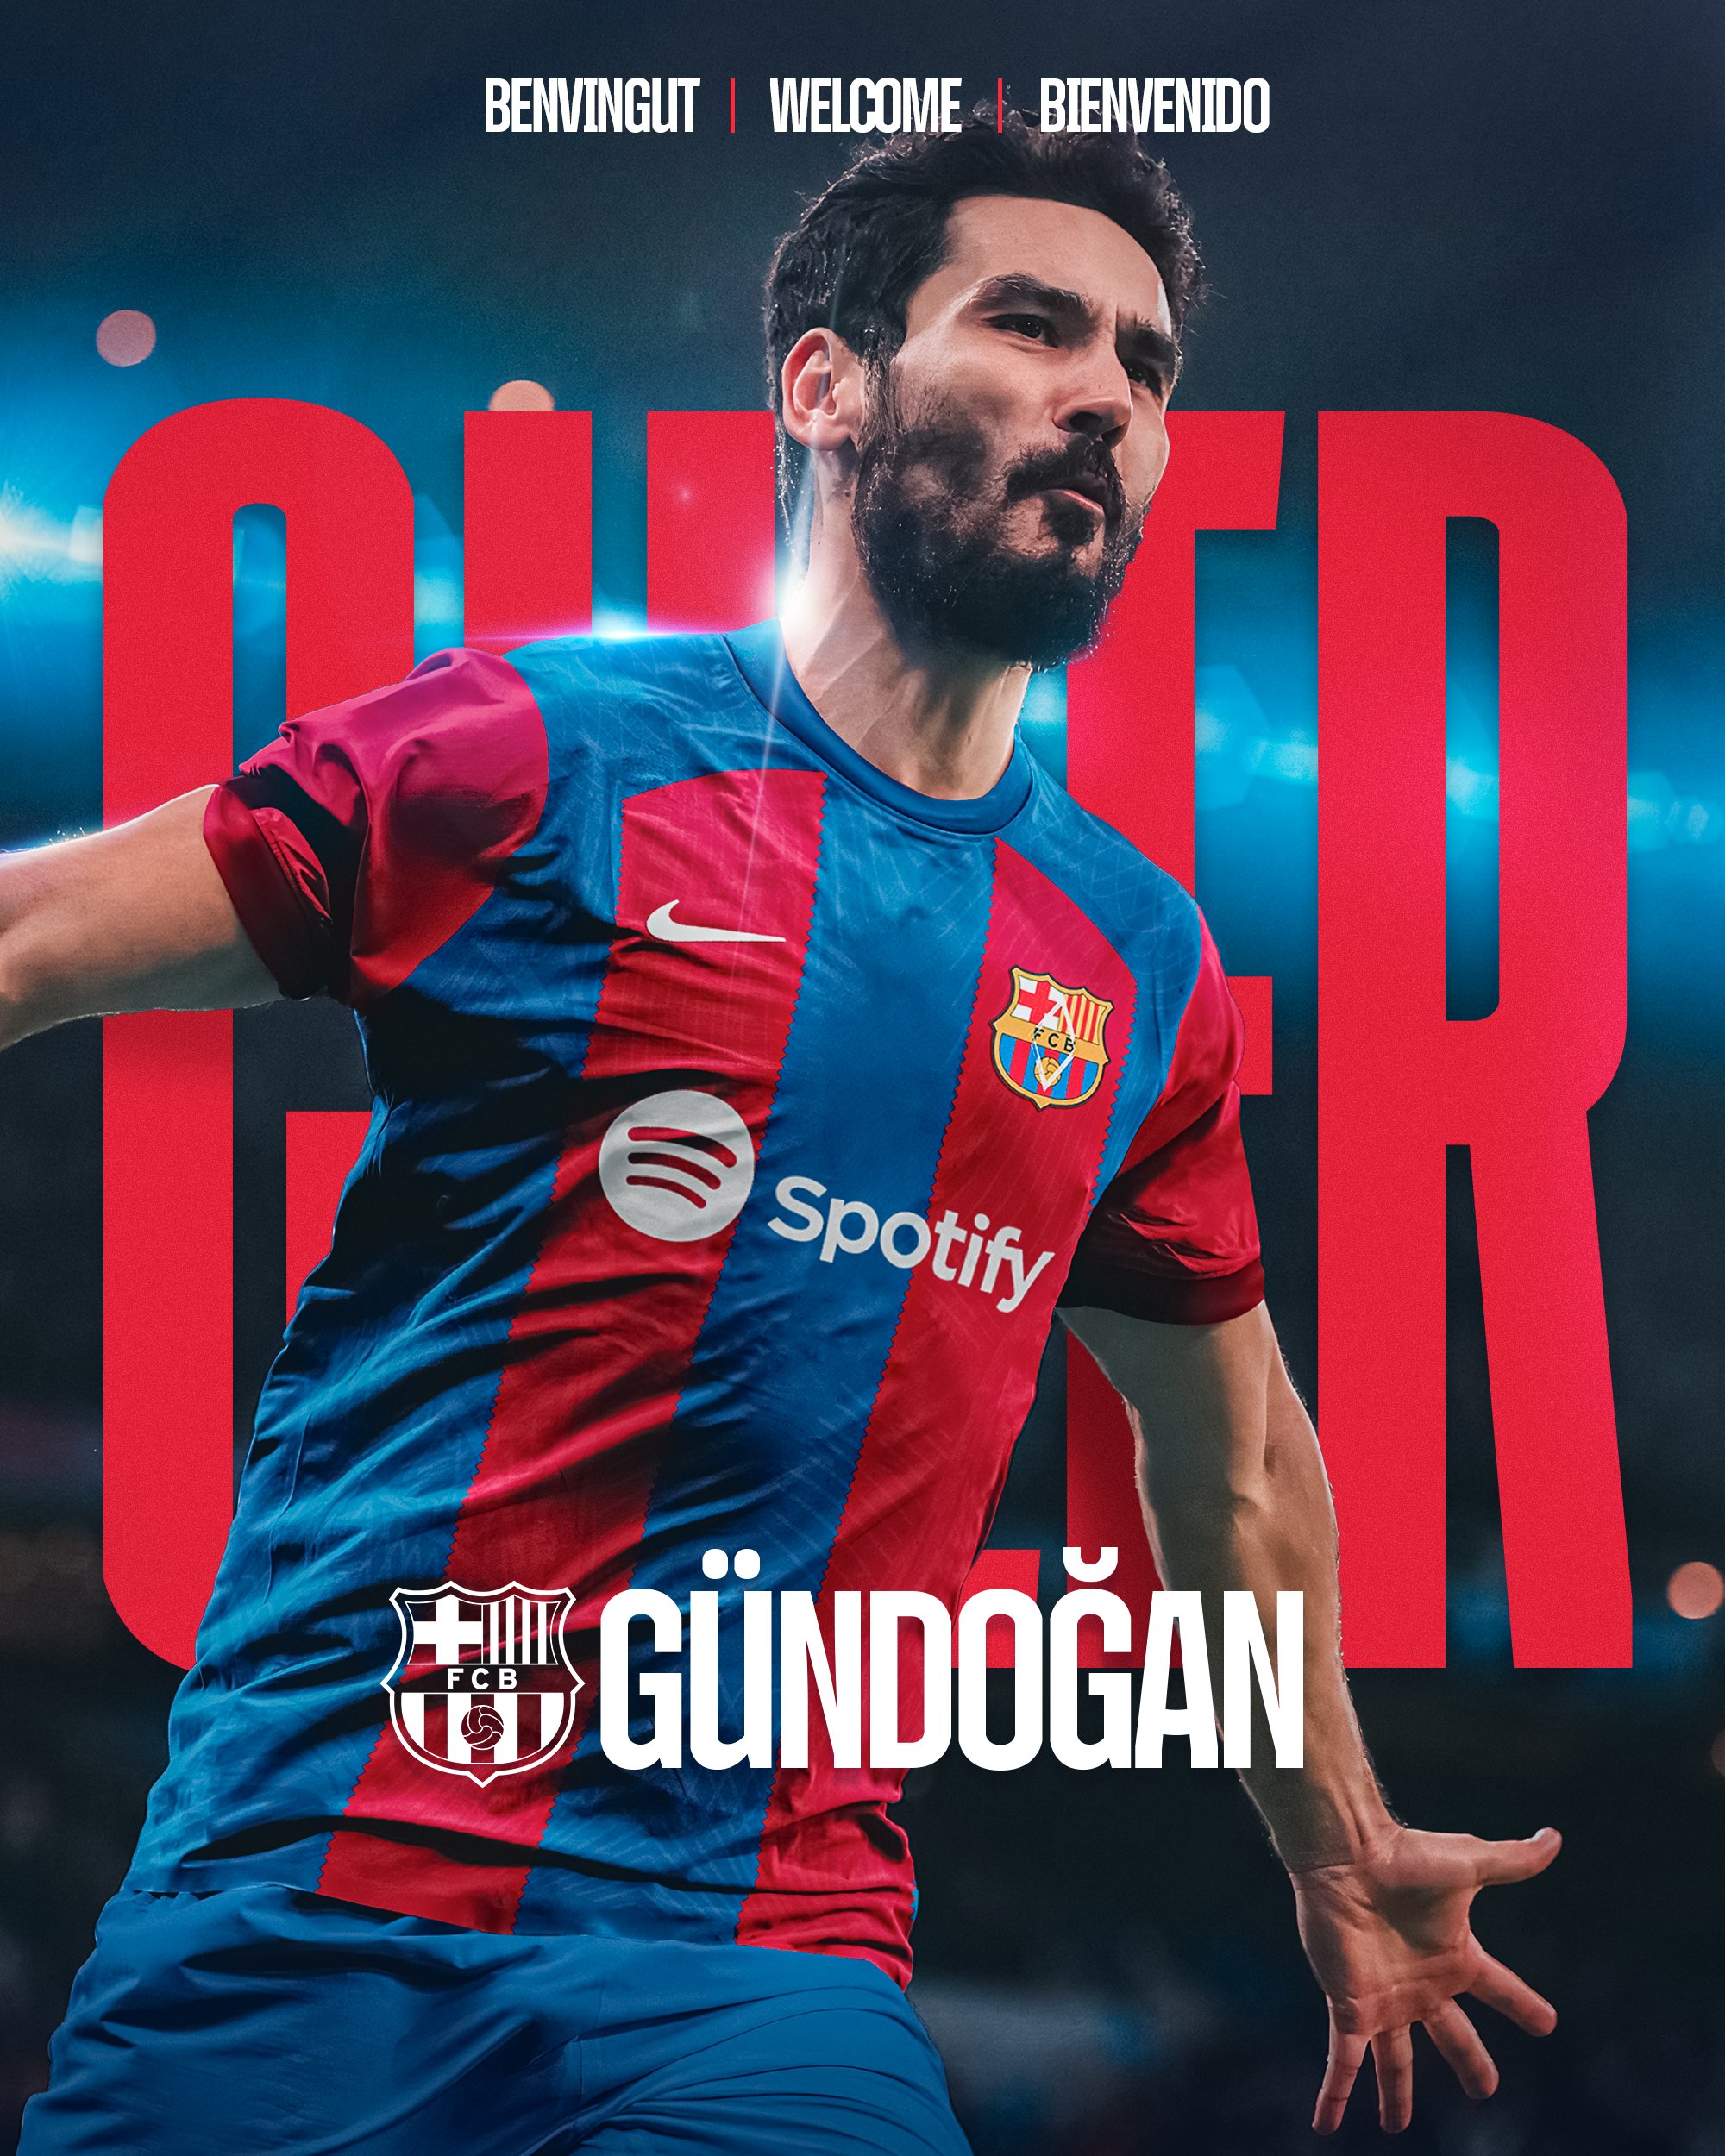 Gündogan deseja jogar no Barcelona, afirma jornal alemão